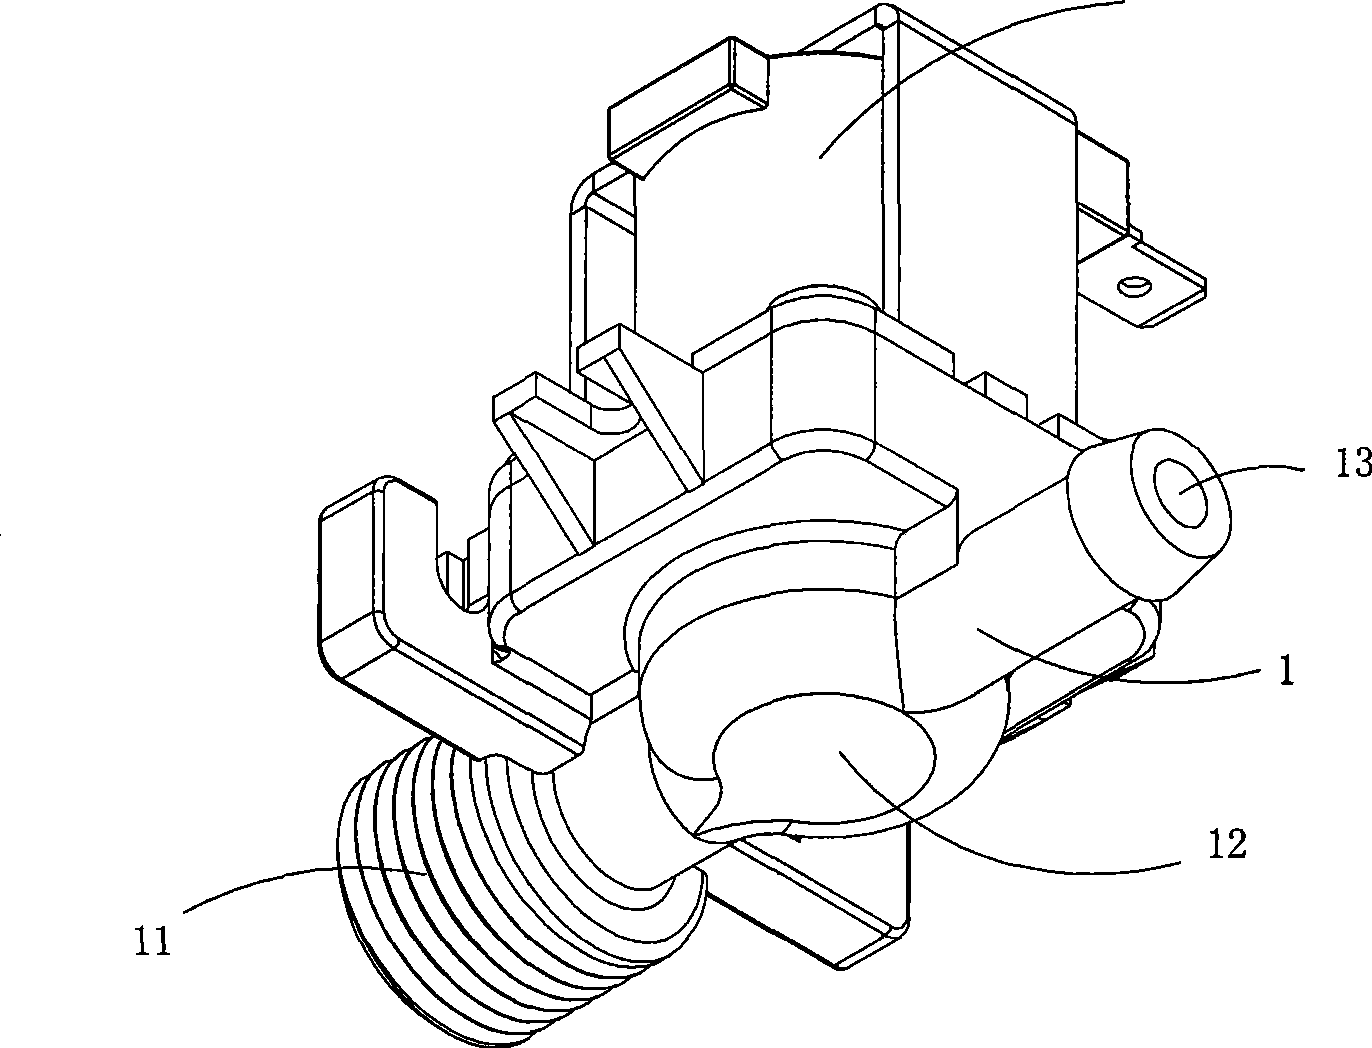 One-way constant flow check valve